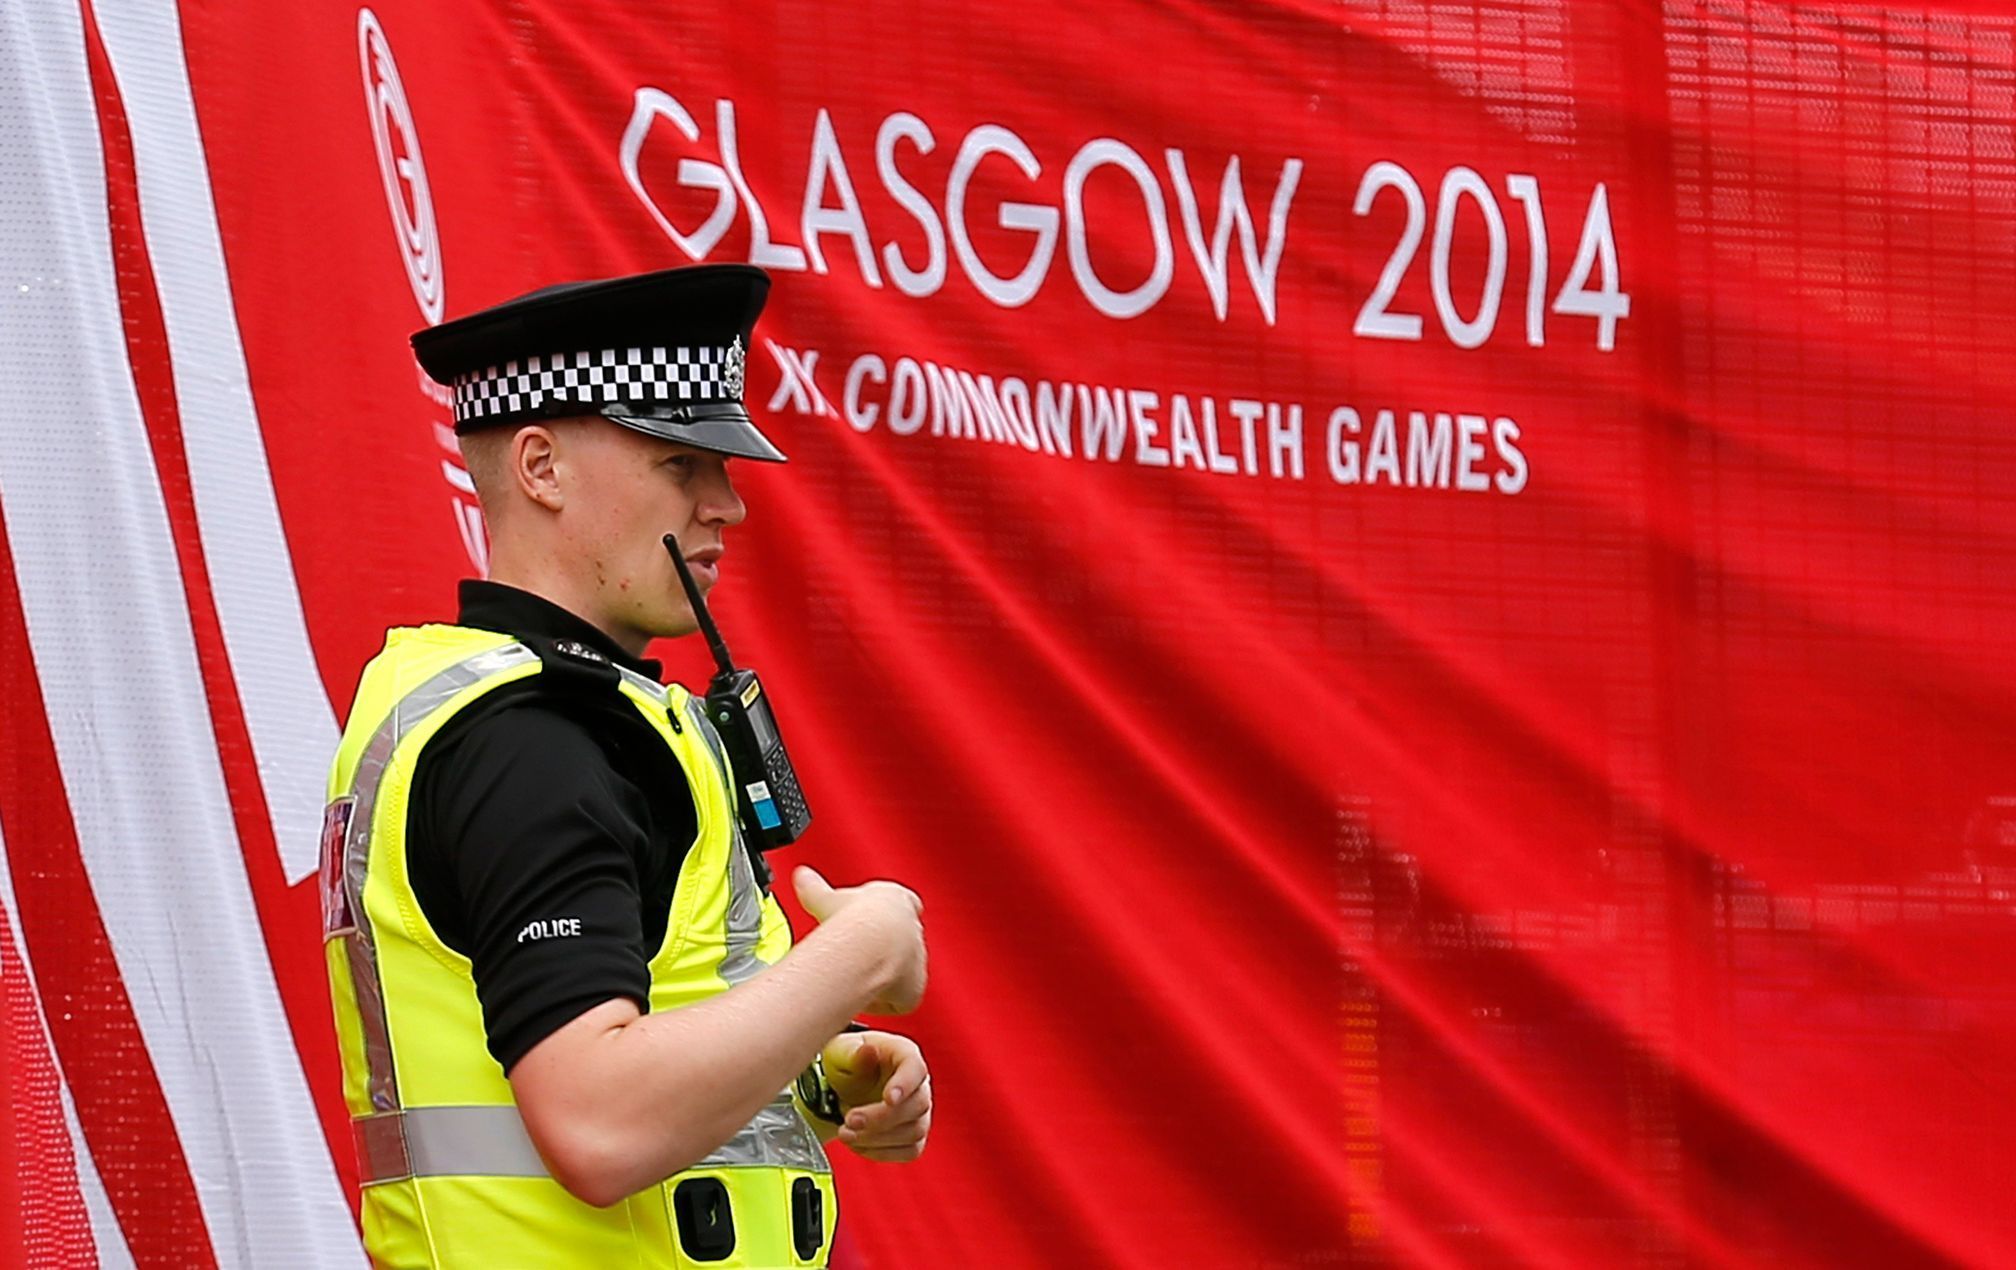 20. Hry Commonwealth v Glasgowě 2014